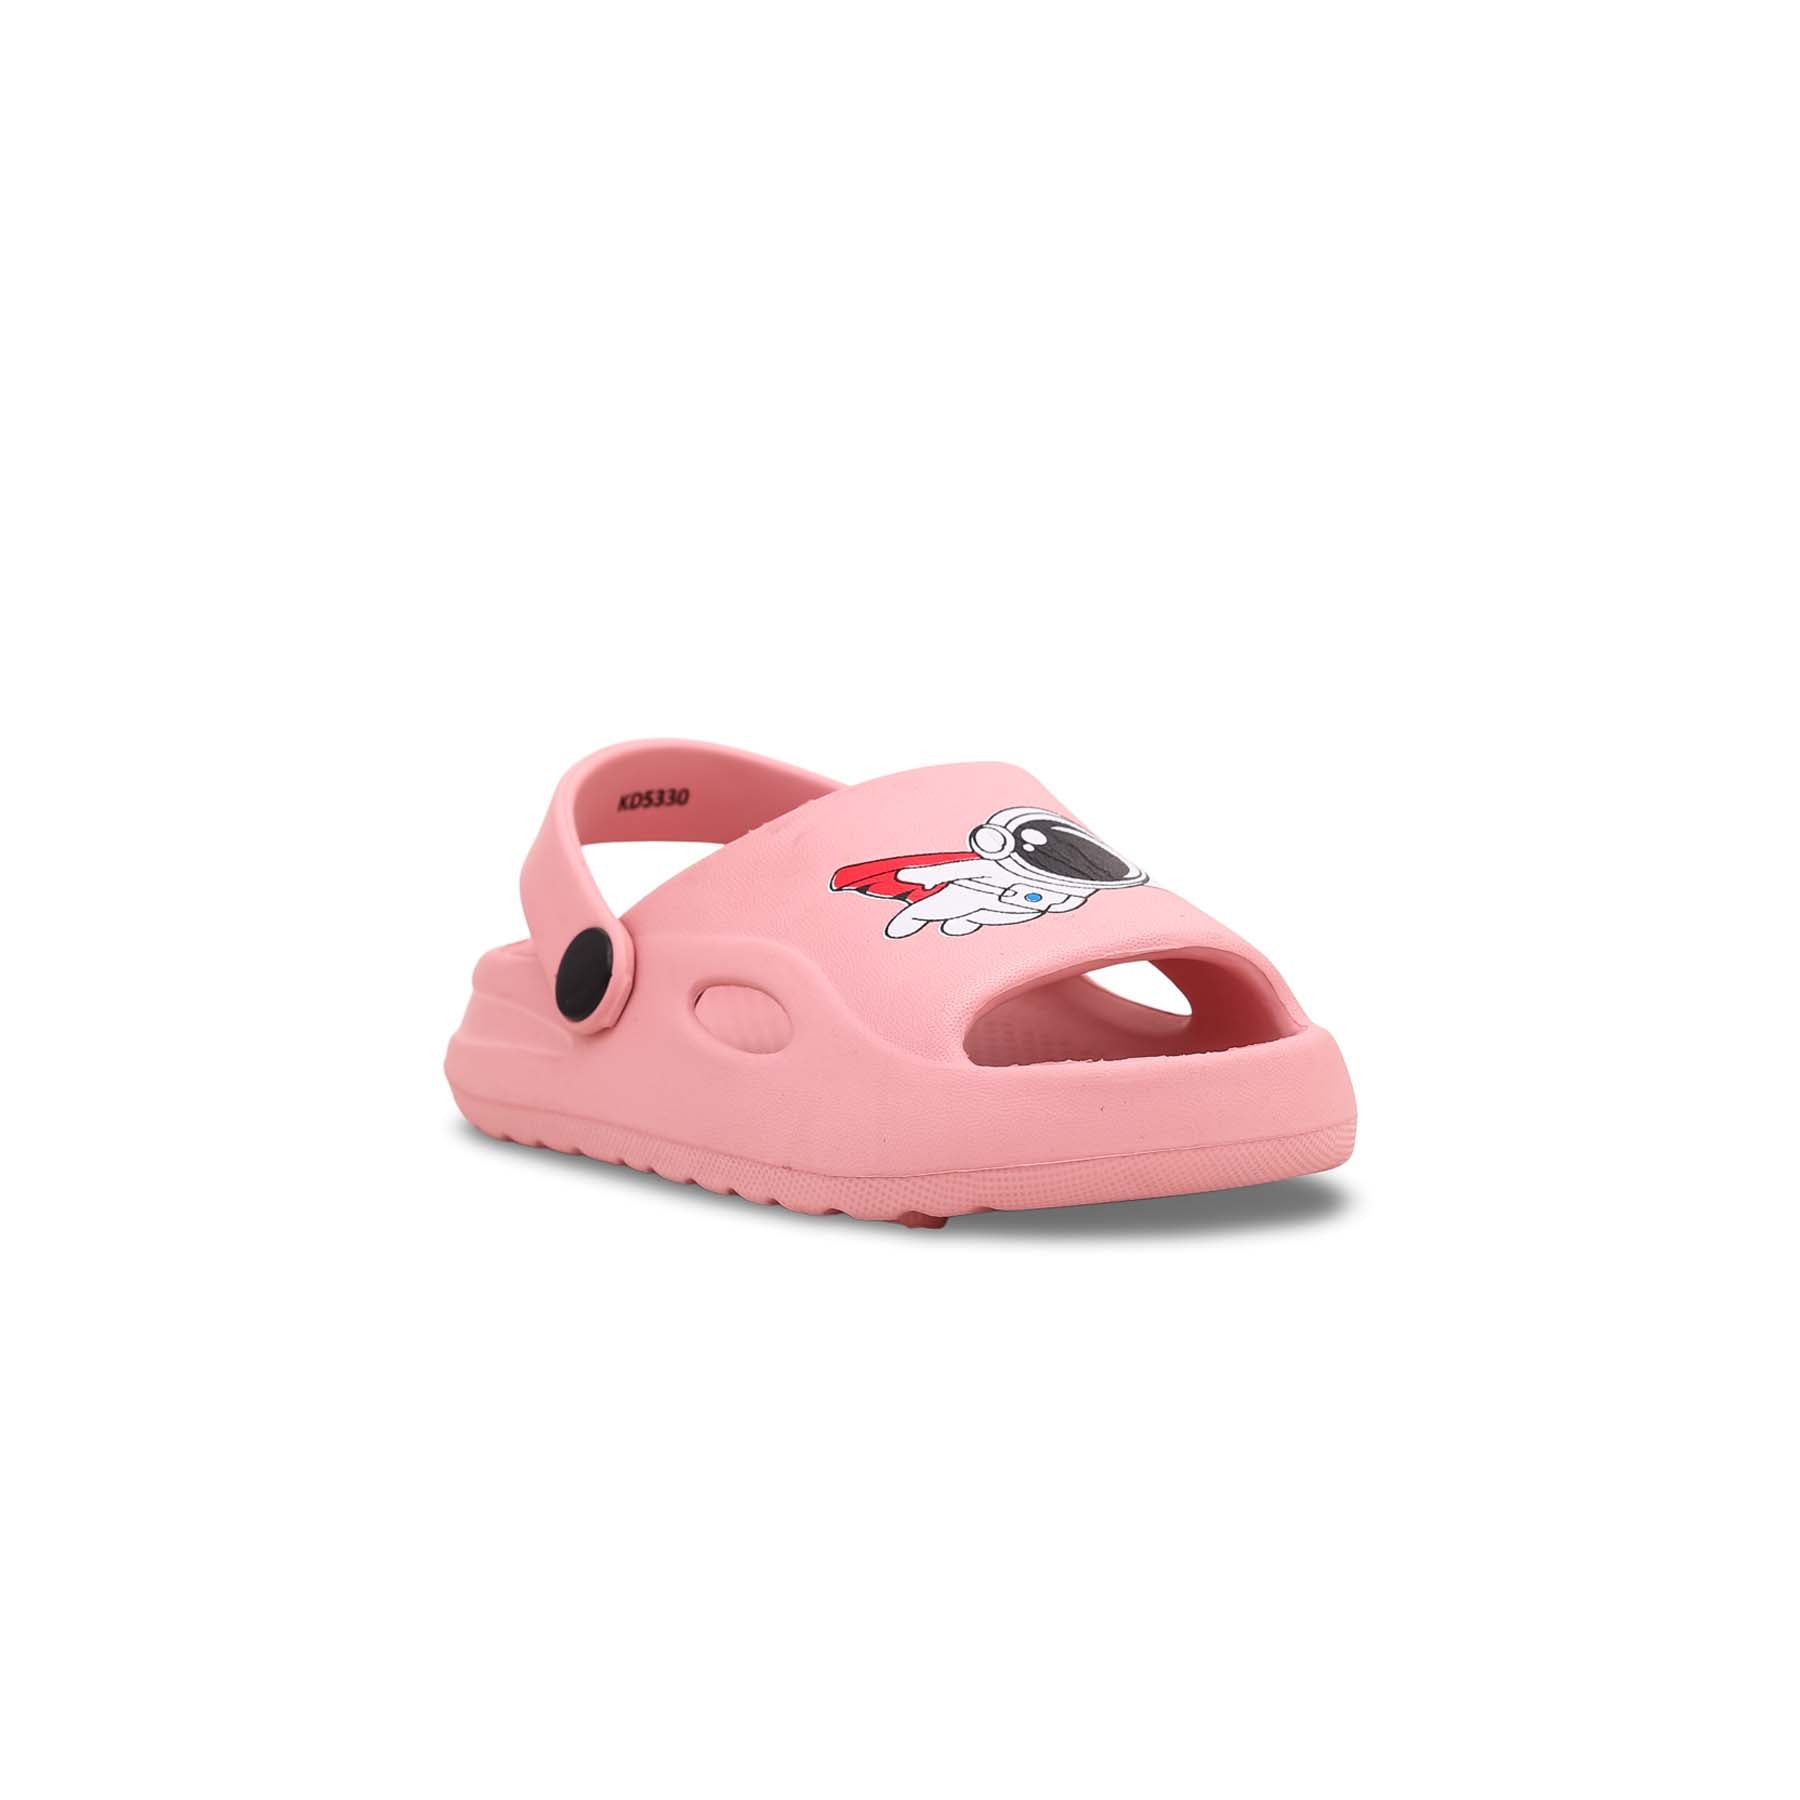 Girls Pink Casual Flip Flop KD5330